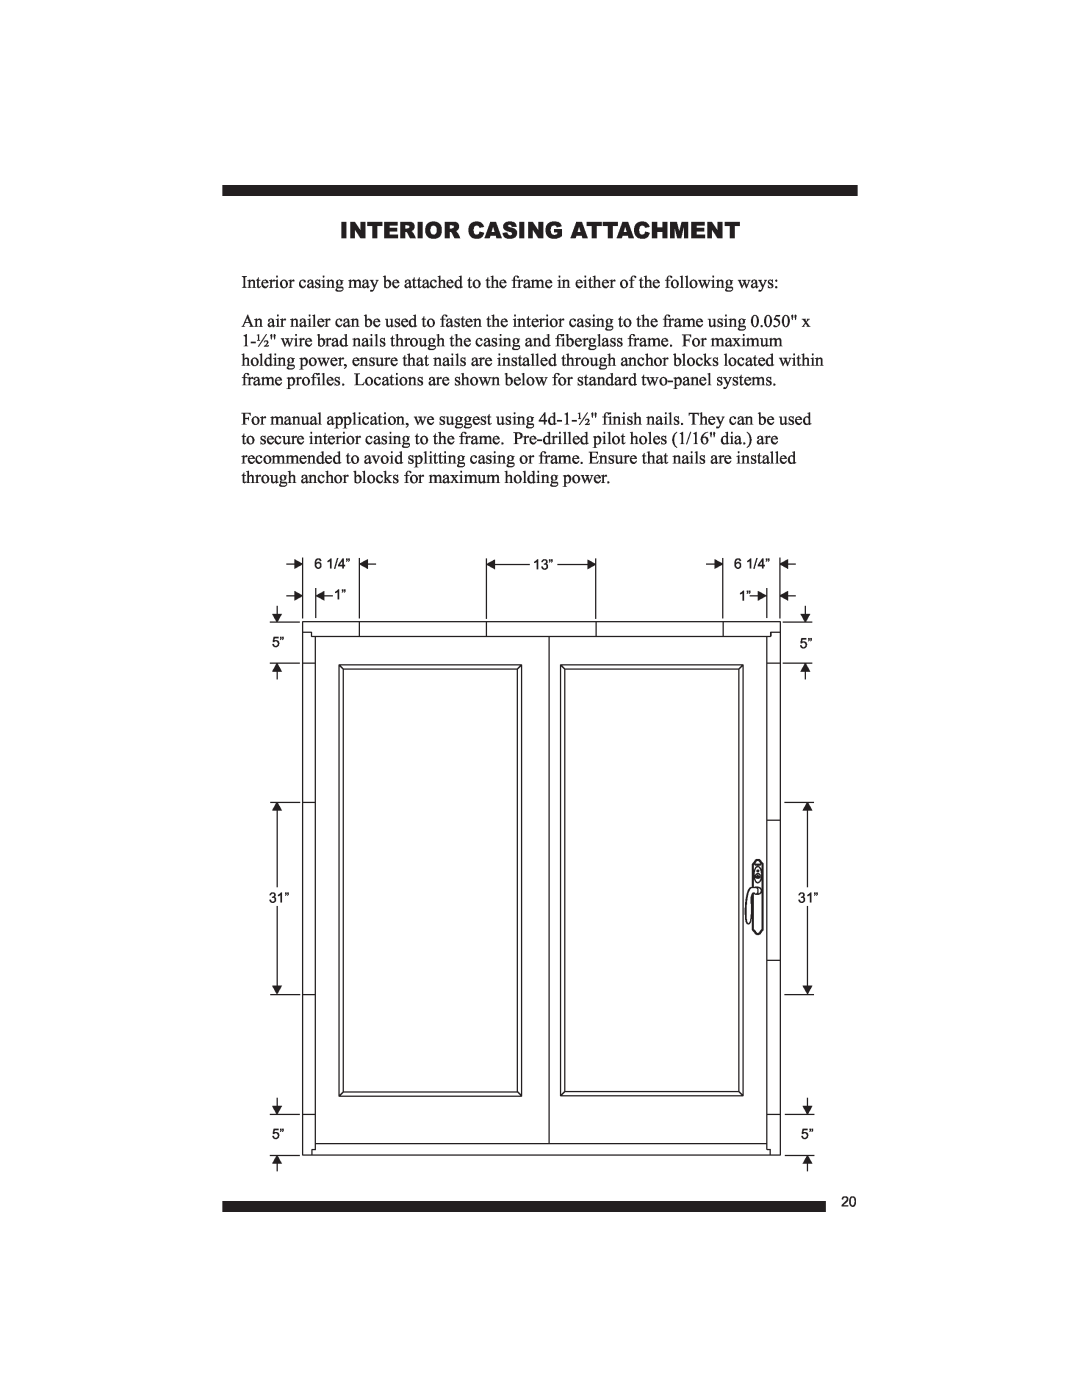 Therma-Tru Fiber-Classic, Smooth-Star manual Interior Casing Attachment, 6 1/4” 1” 5” 